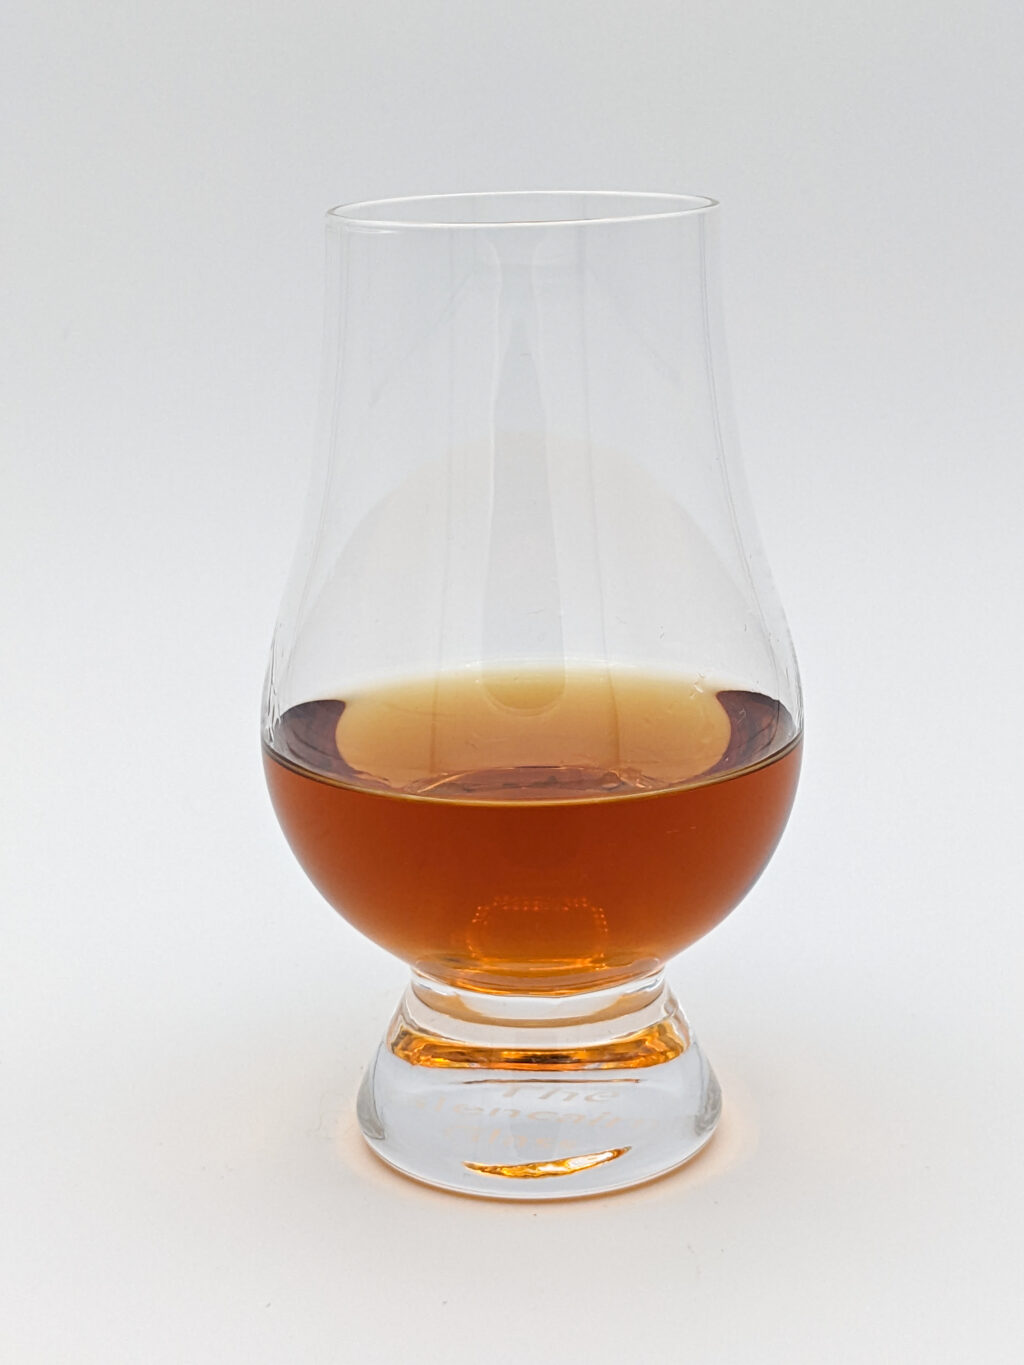 brown liquid in a glencairn glass